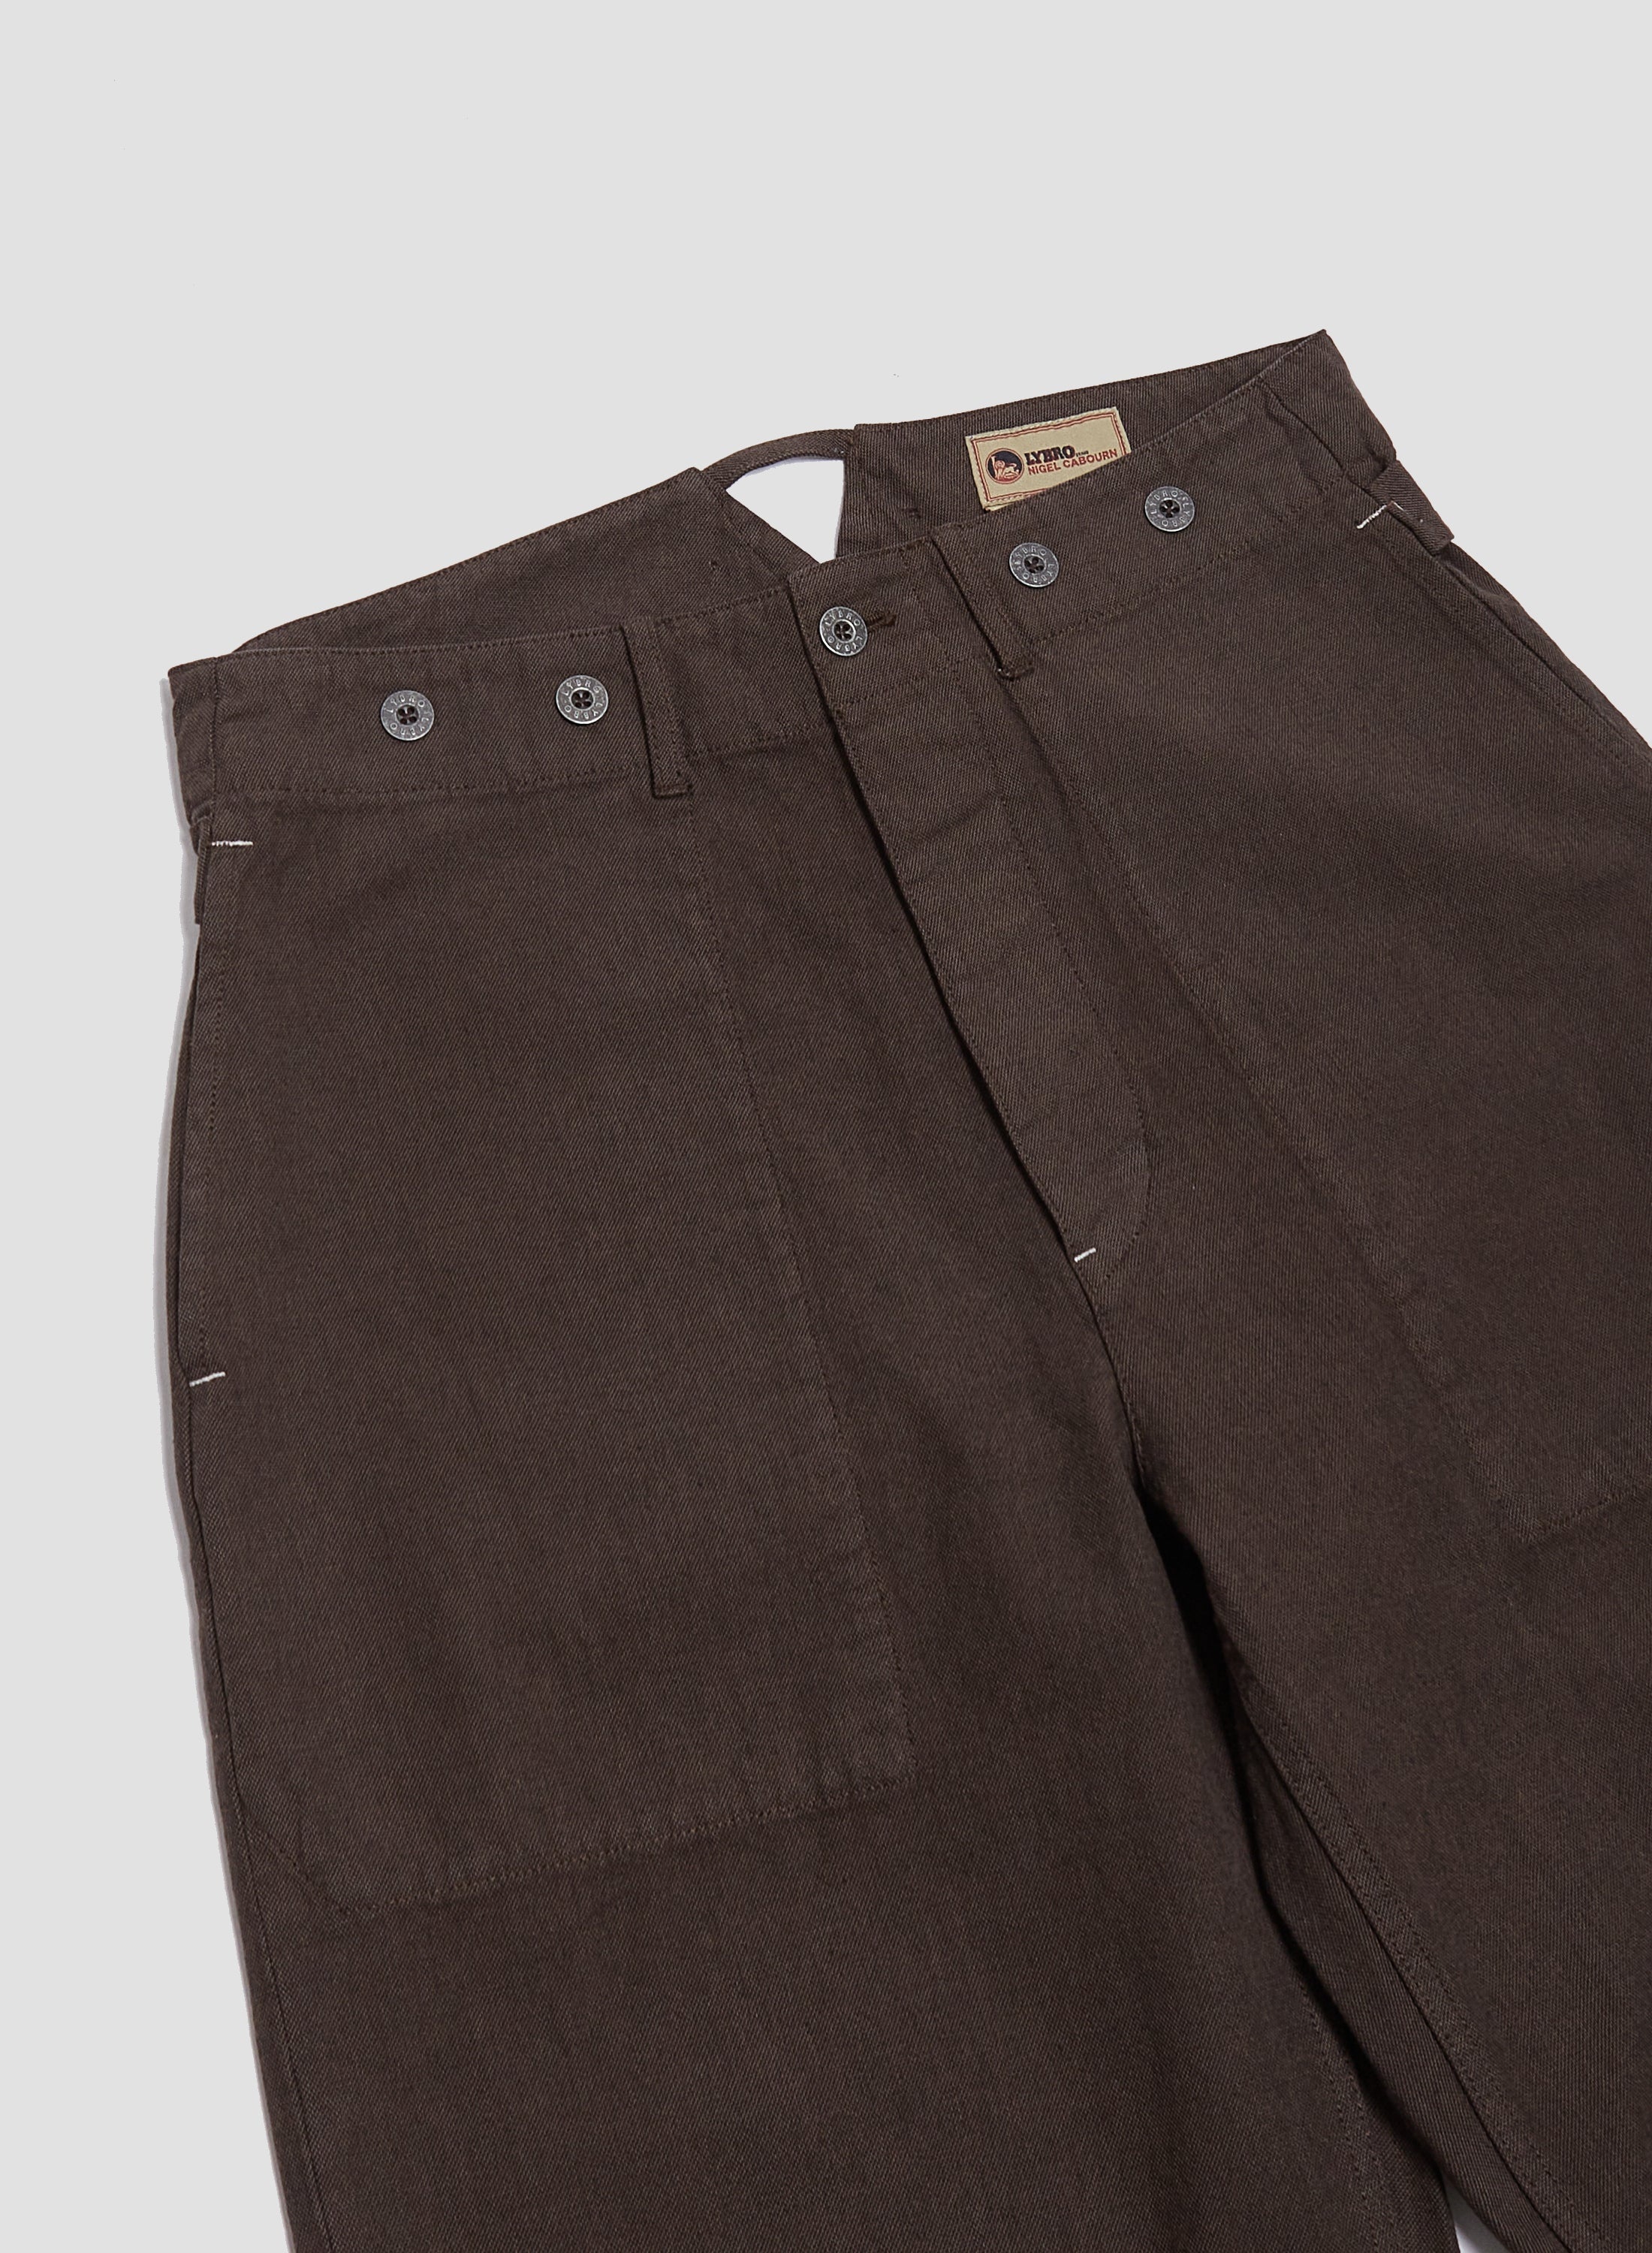 New Workwear Pant Broken Twill in Brown - 3